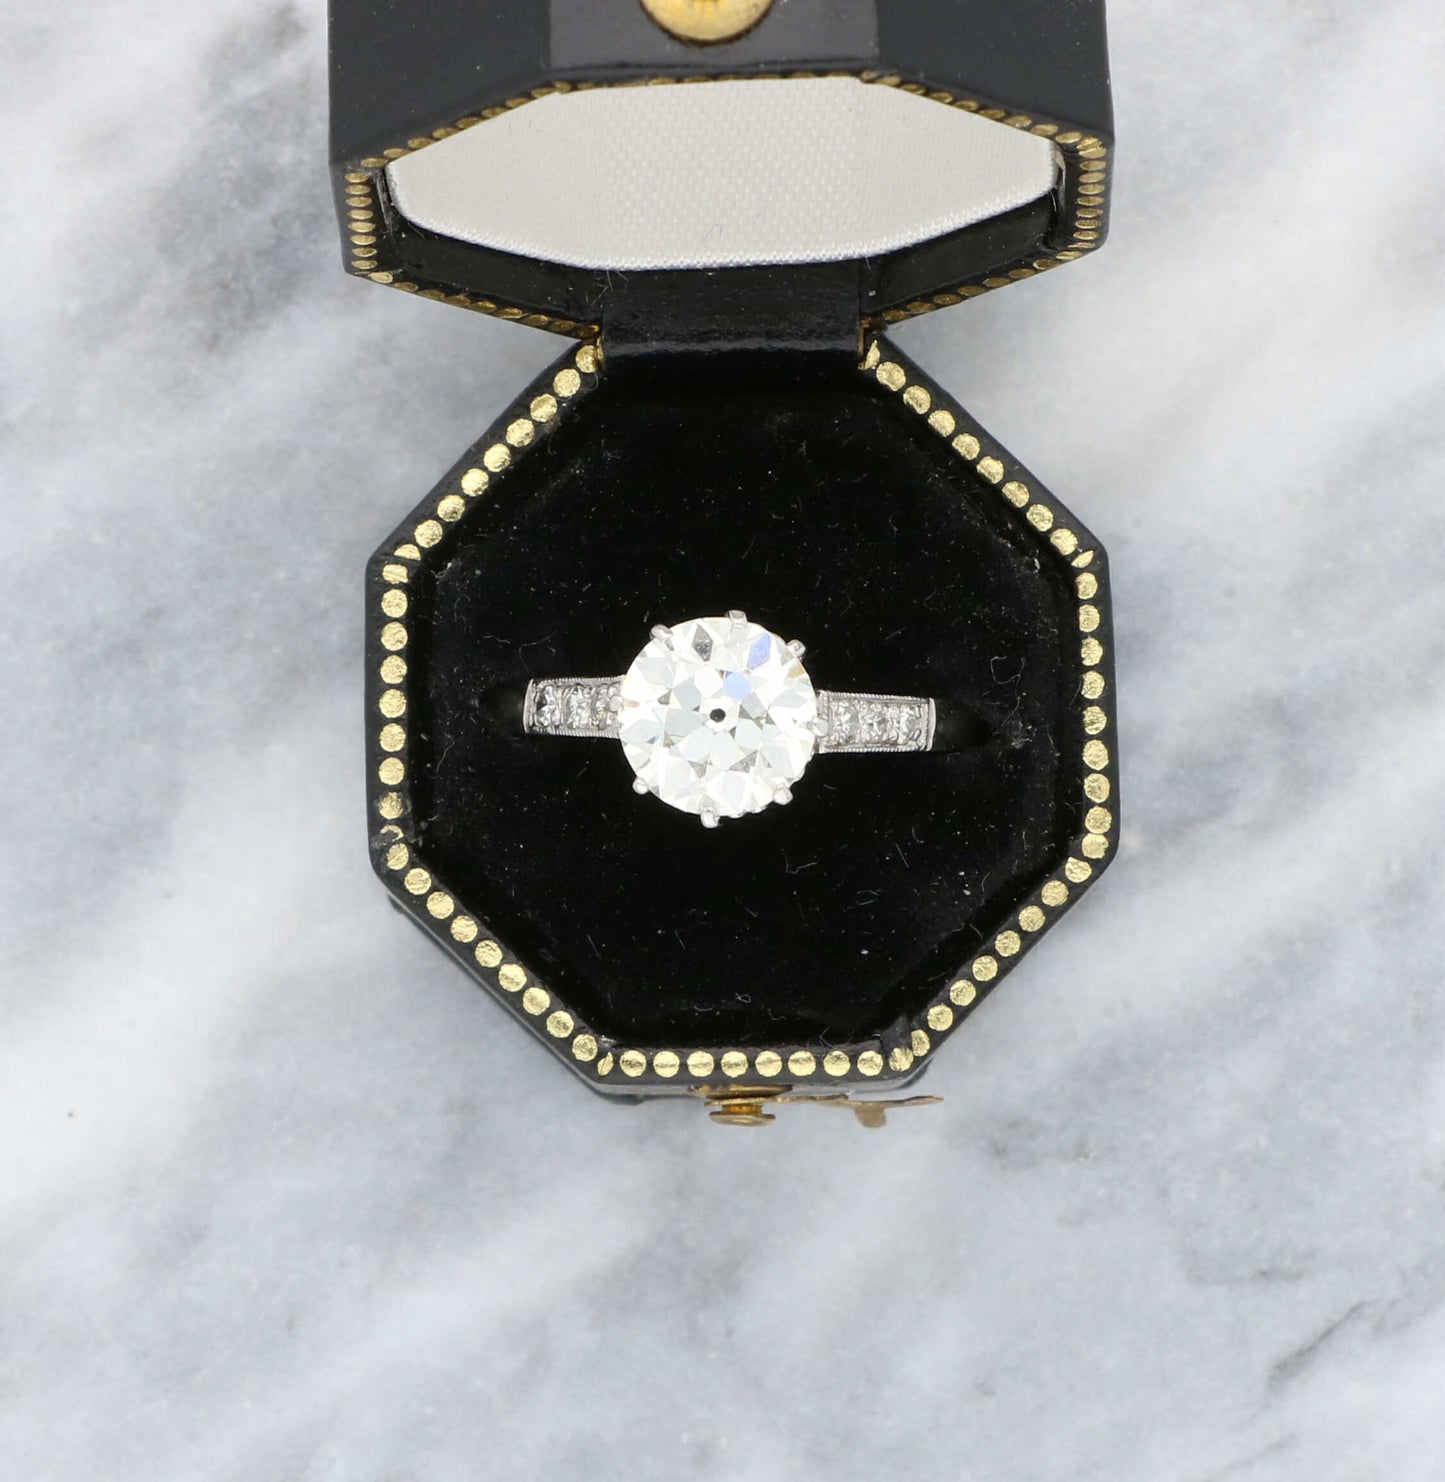 A single stone 1.68ct diamond ring